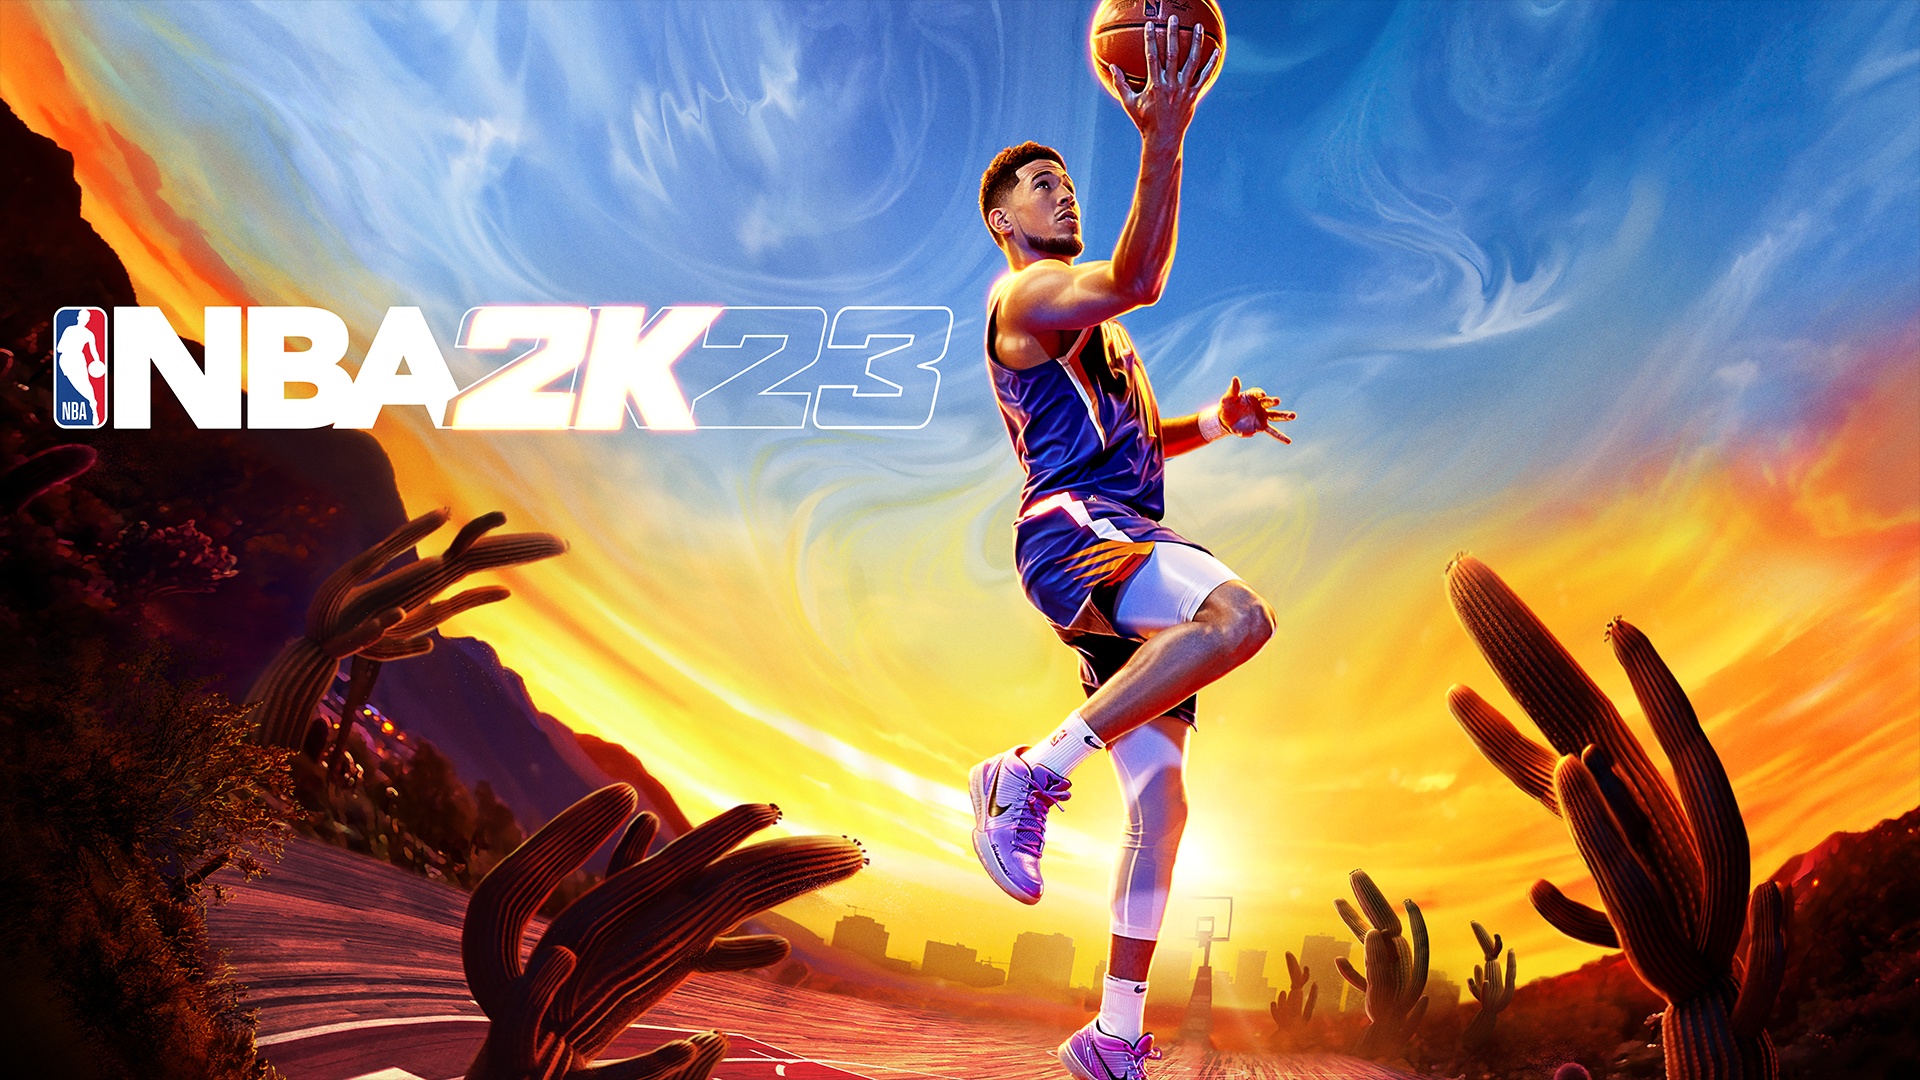 June PlayStation Plus FREE games NBA 2K23, Jurassic World, and Trek to Yomi